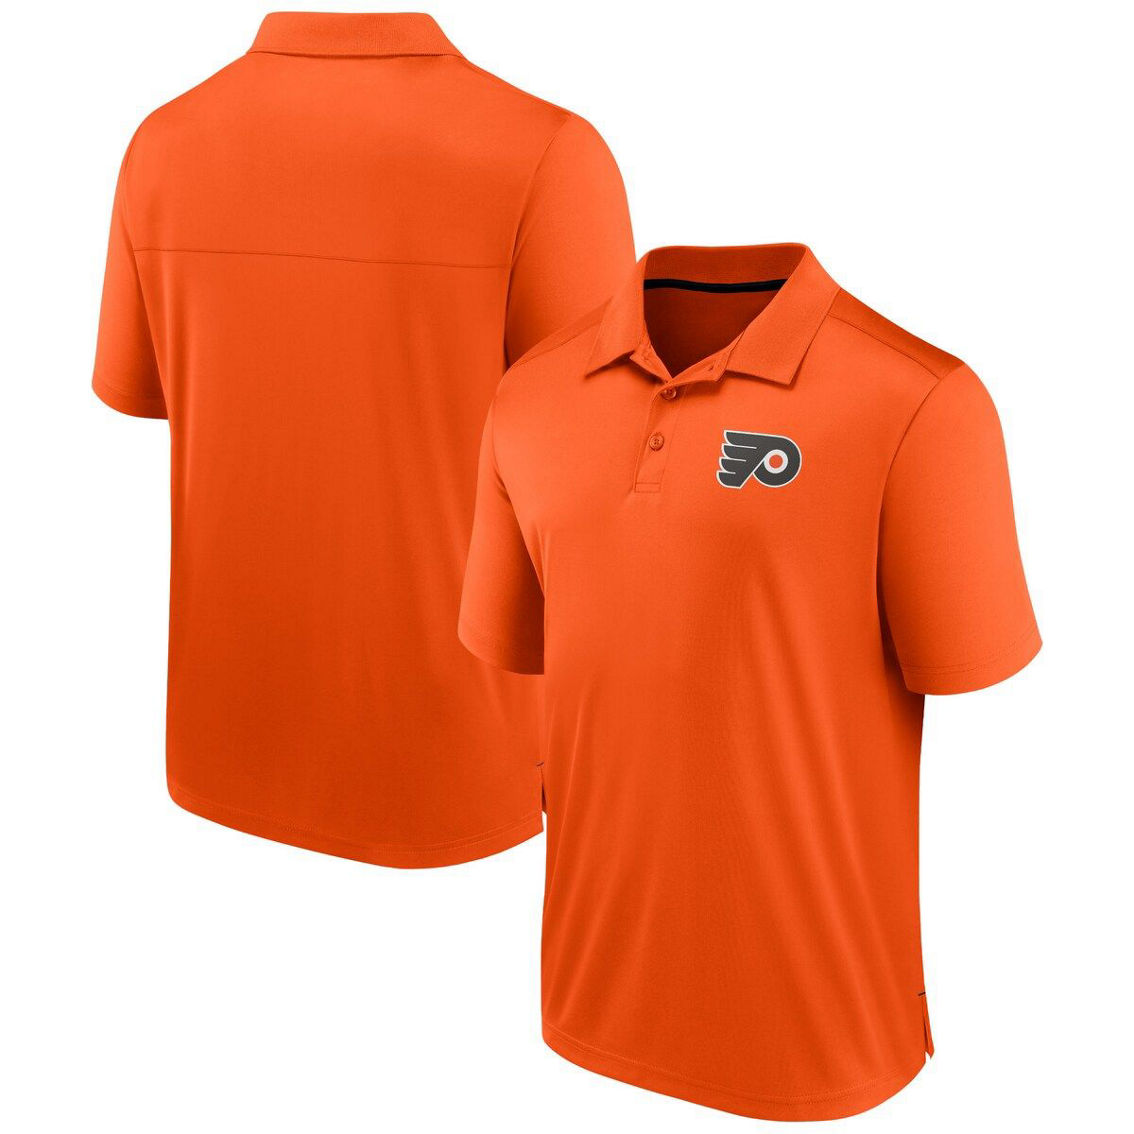 Fanatics Branded Men's Orange Philadelphia Flyers Polo - Image 2 of 4